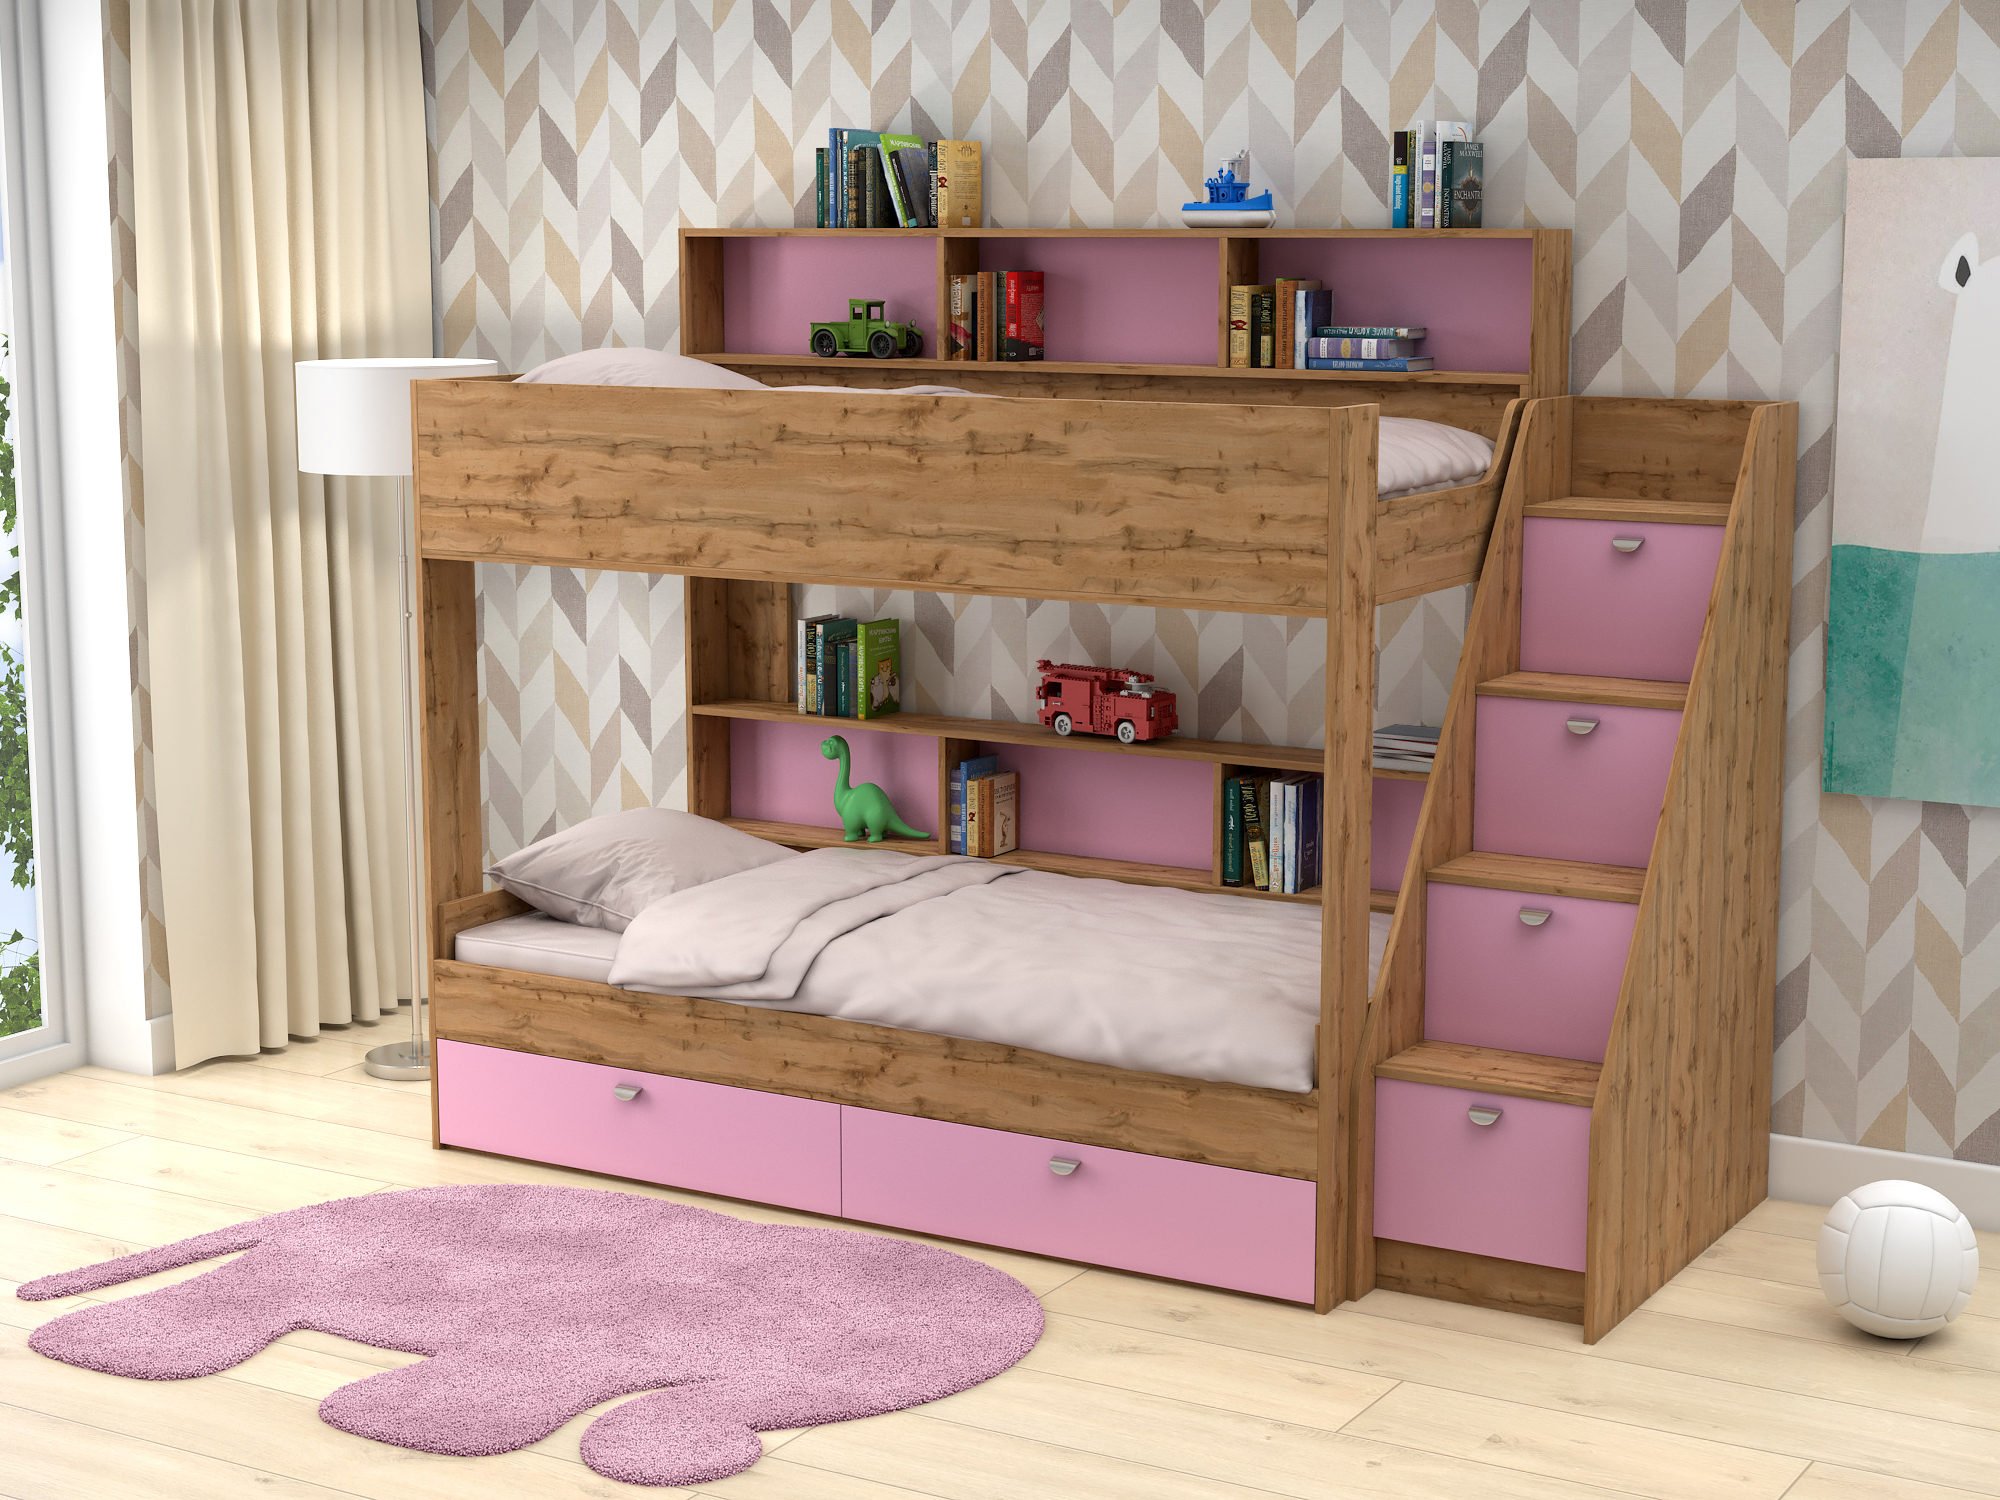 Двухъярусная кровать Golden Kids 10 (90х190) Розовый, Бежевый, ЛДСП двухъярусная кровать golden kids 10 90х190 бежевый коричневый темный лдсп